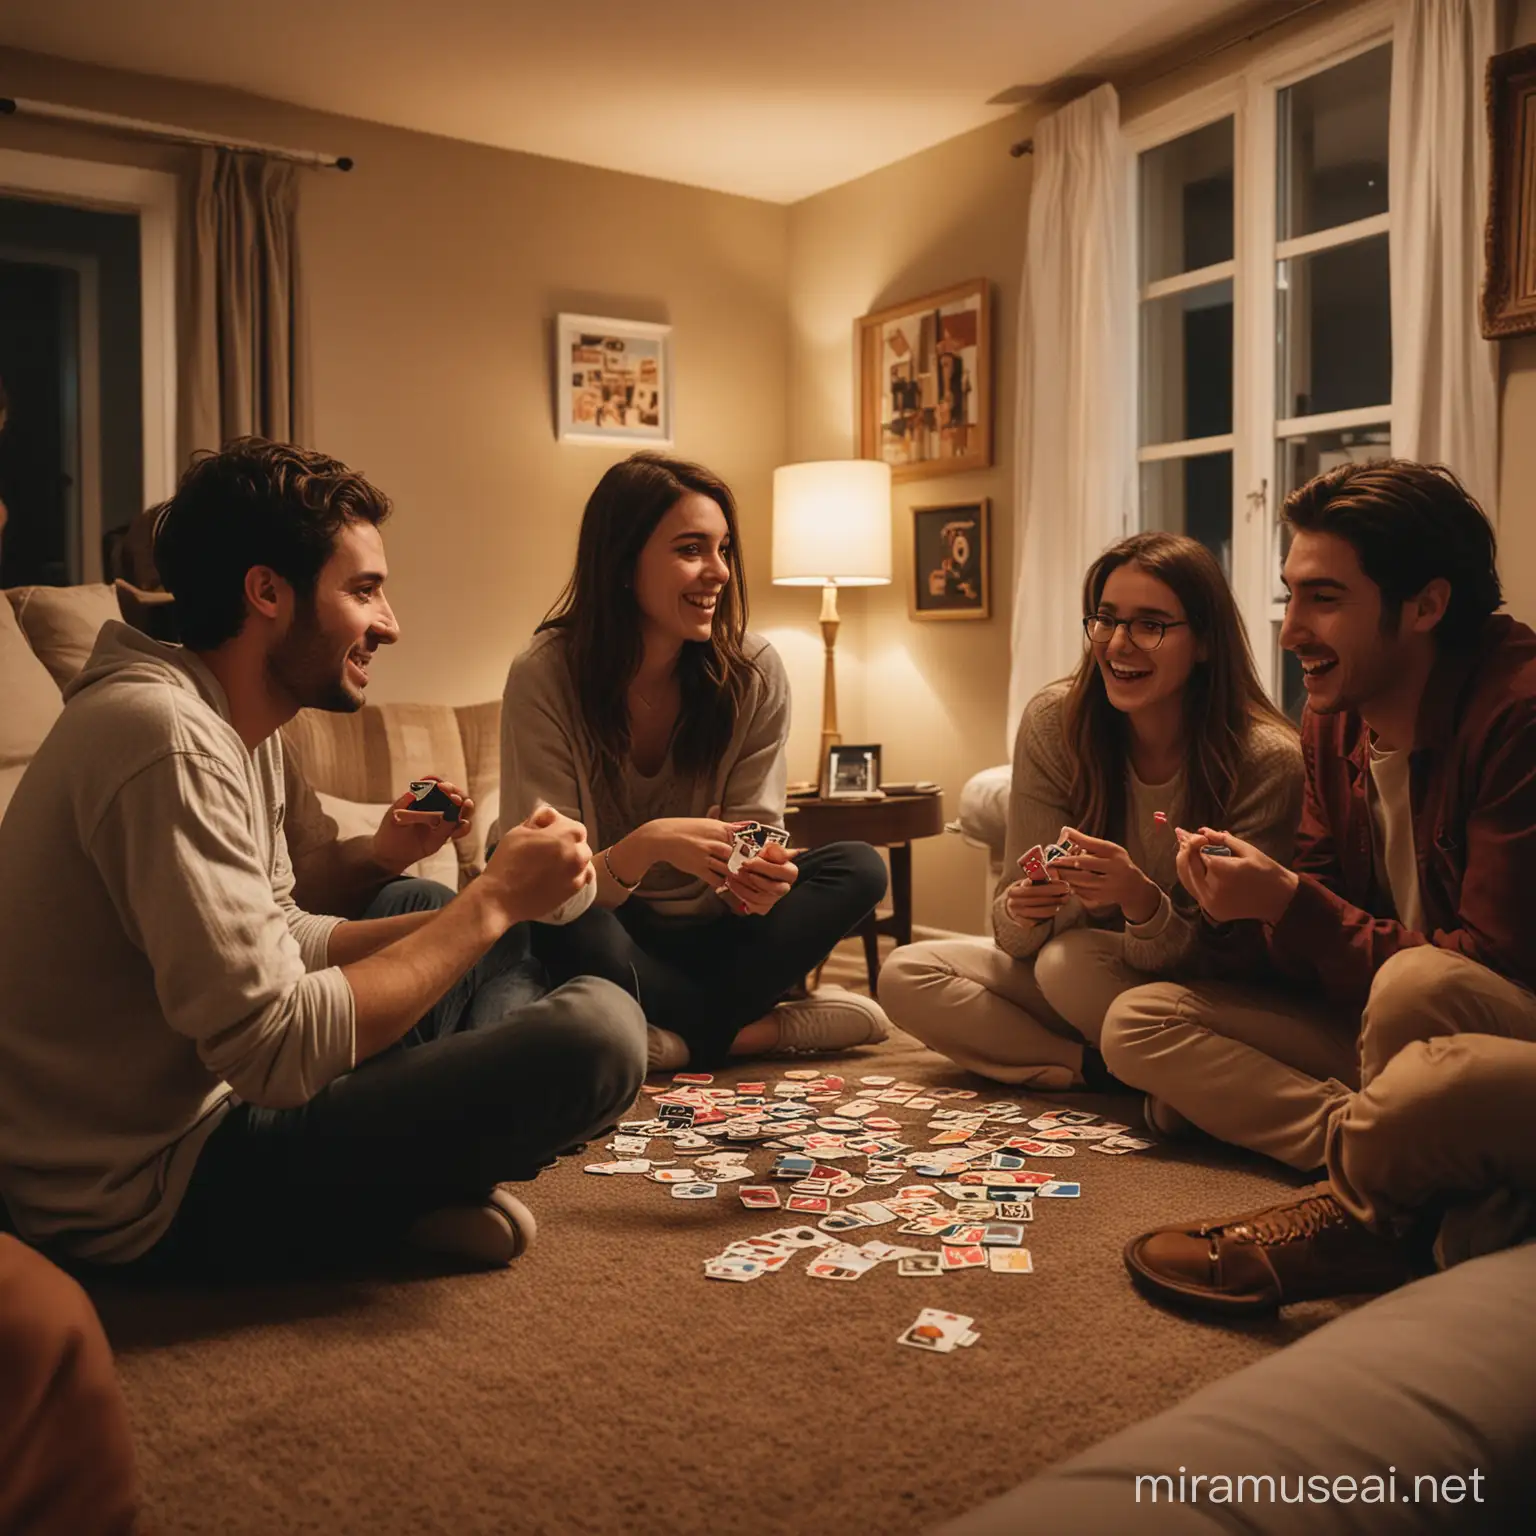 University Friends Enjoying UNO Game Night in Cozy Dimly Lit Living Room